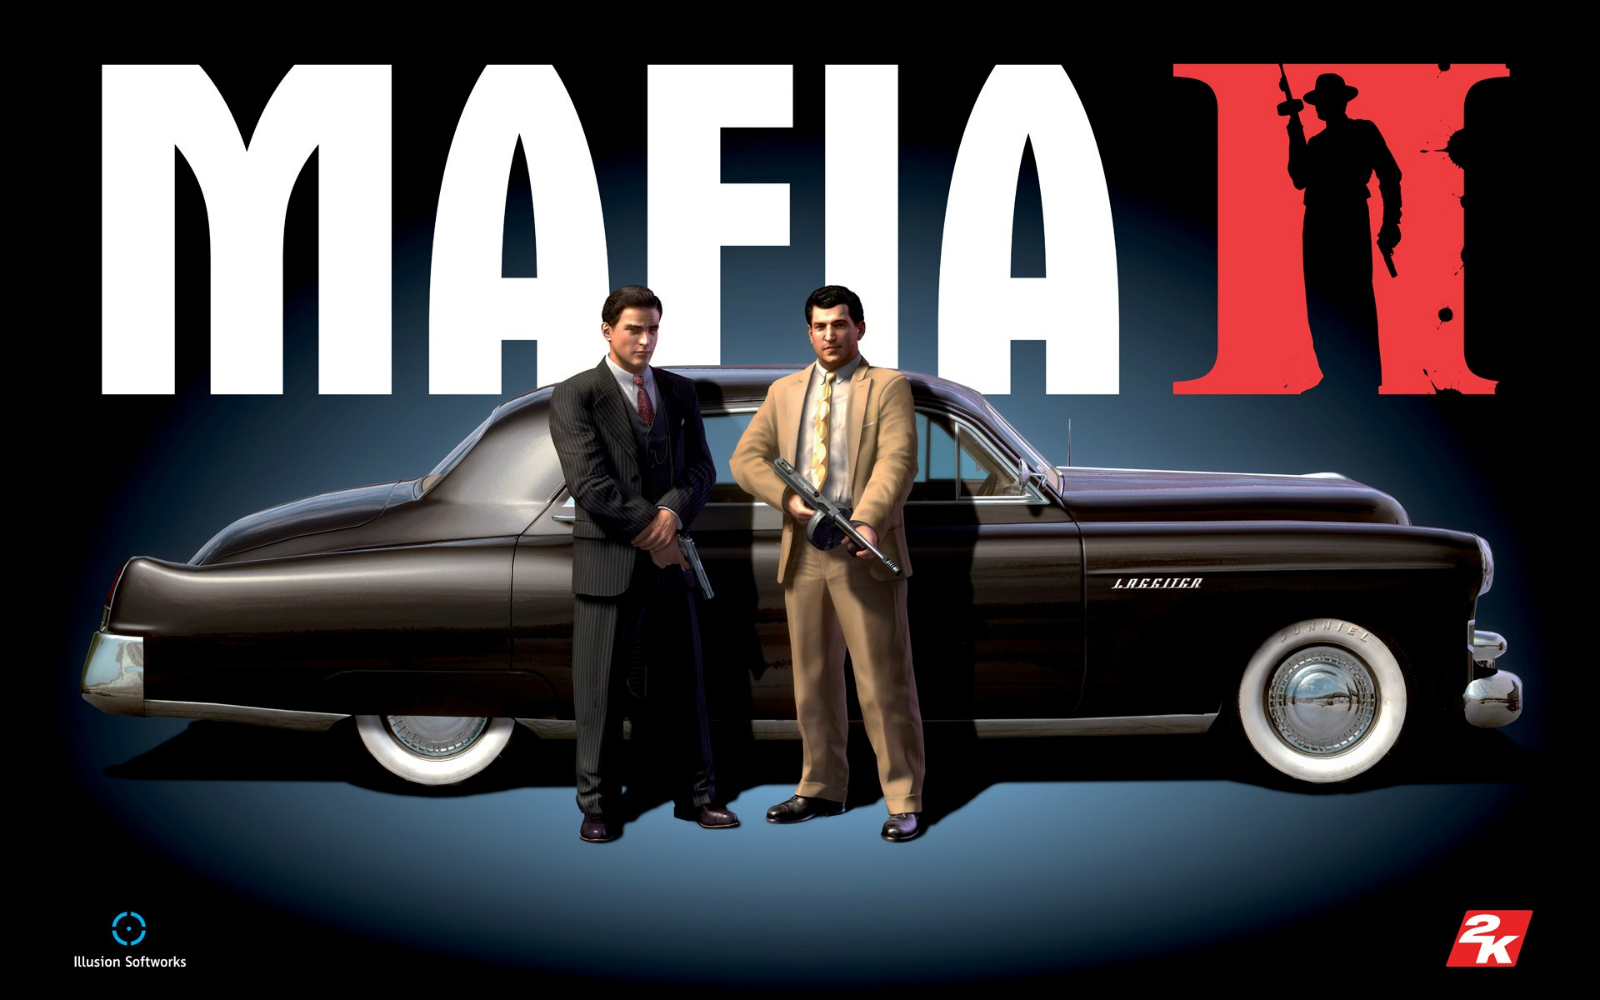 Mafia Ii HD Game Wallpaper Desktop